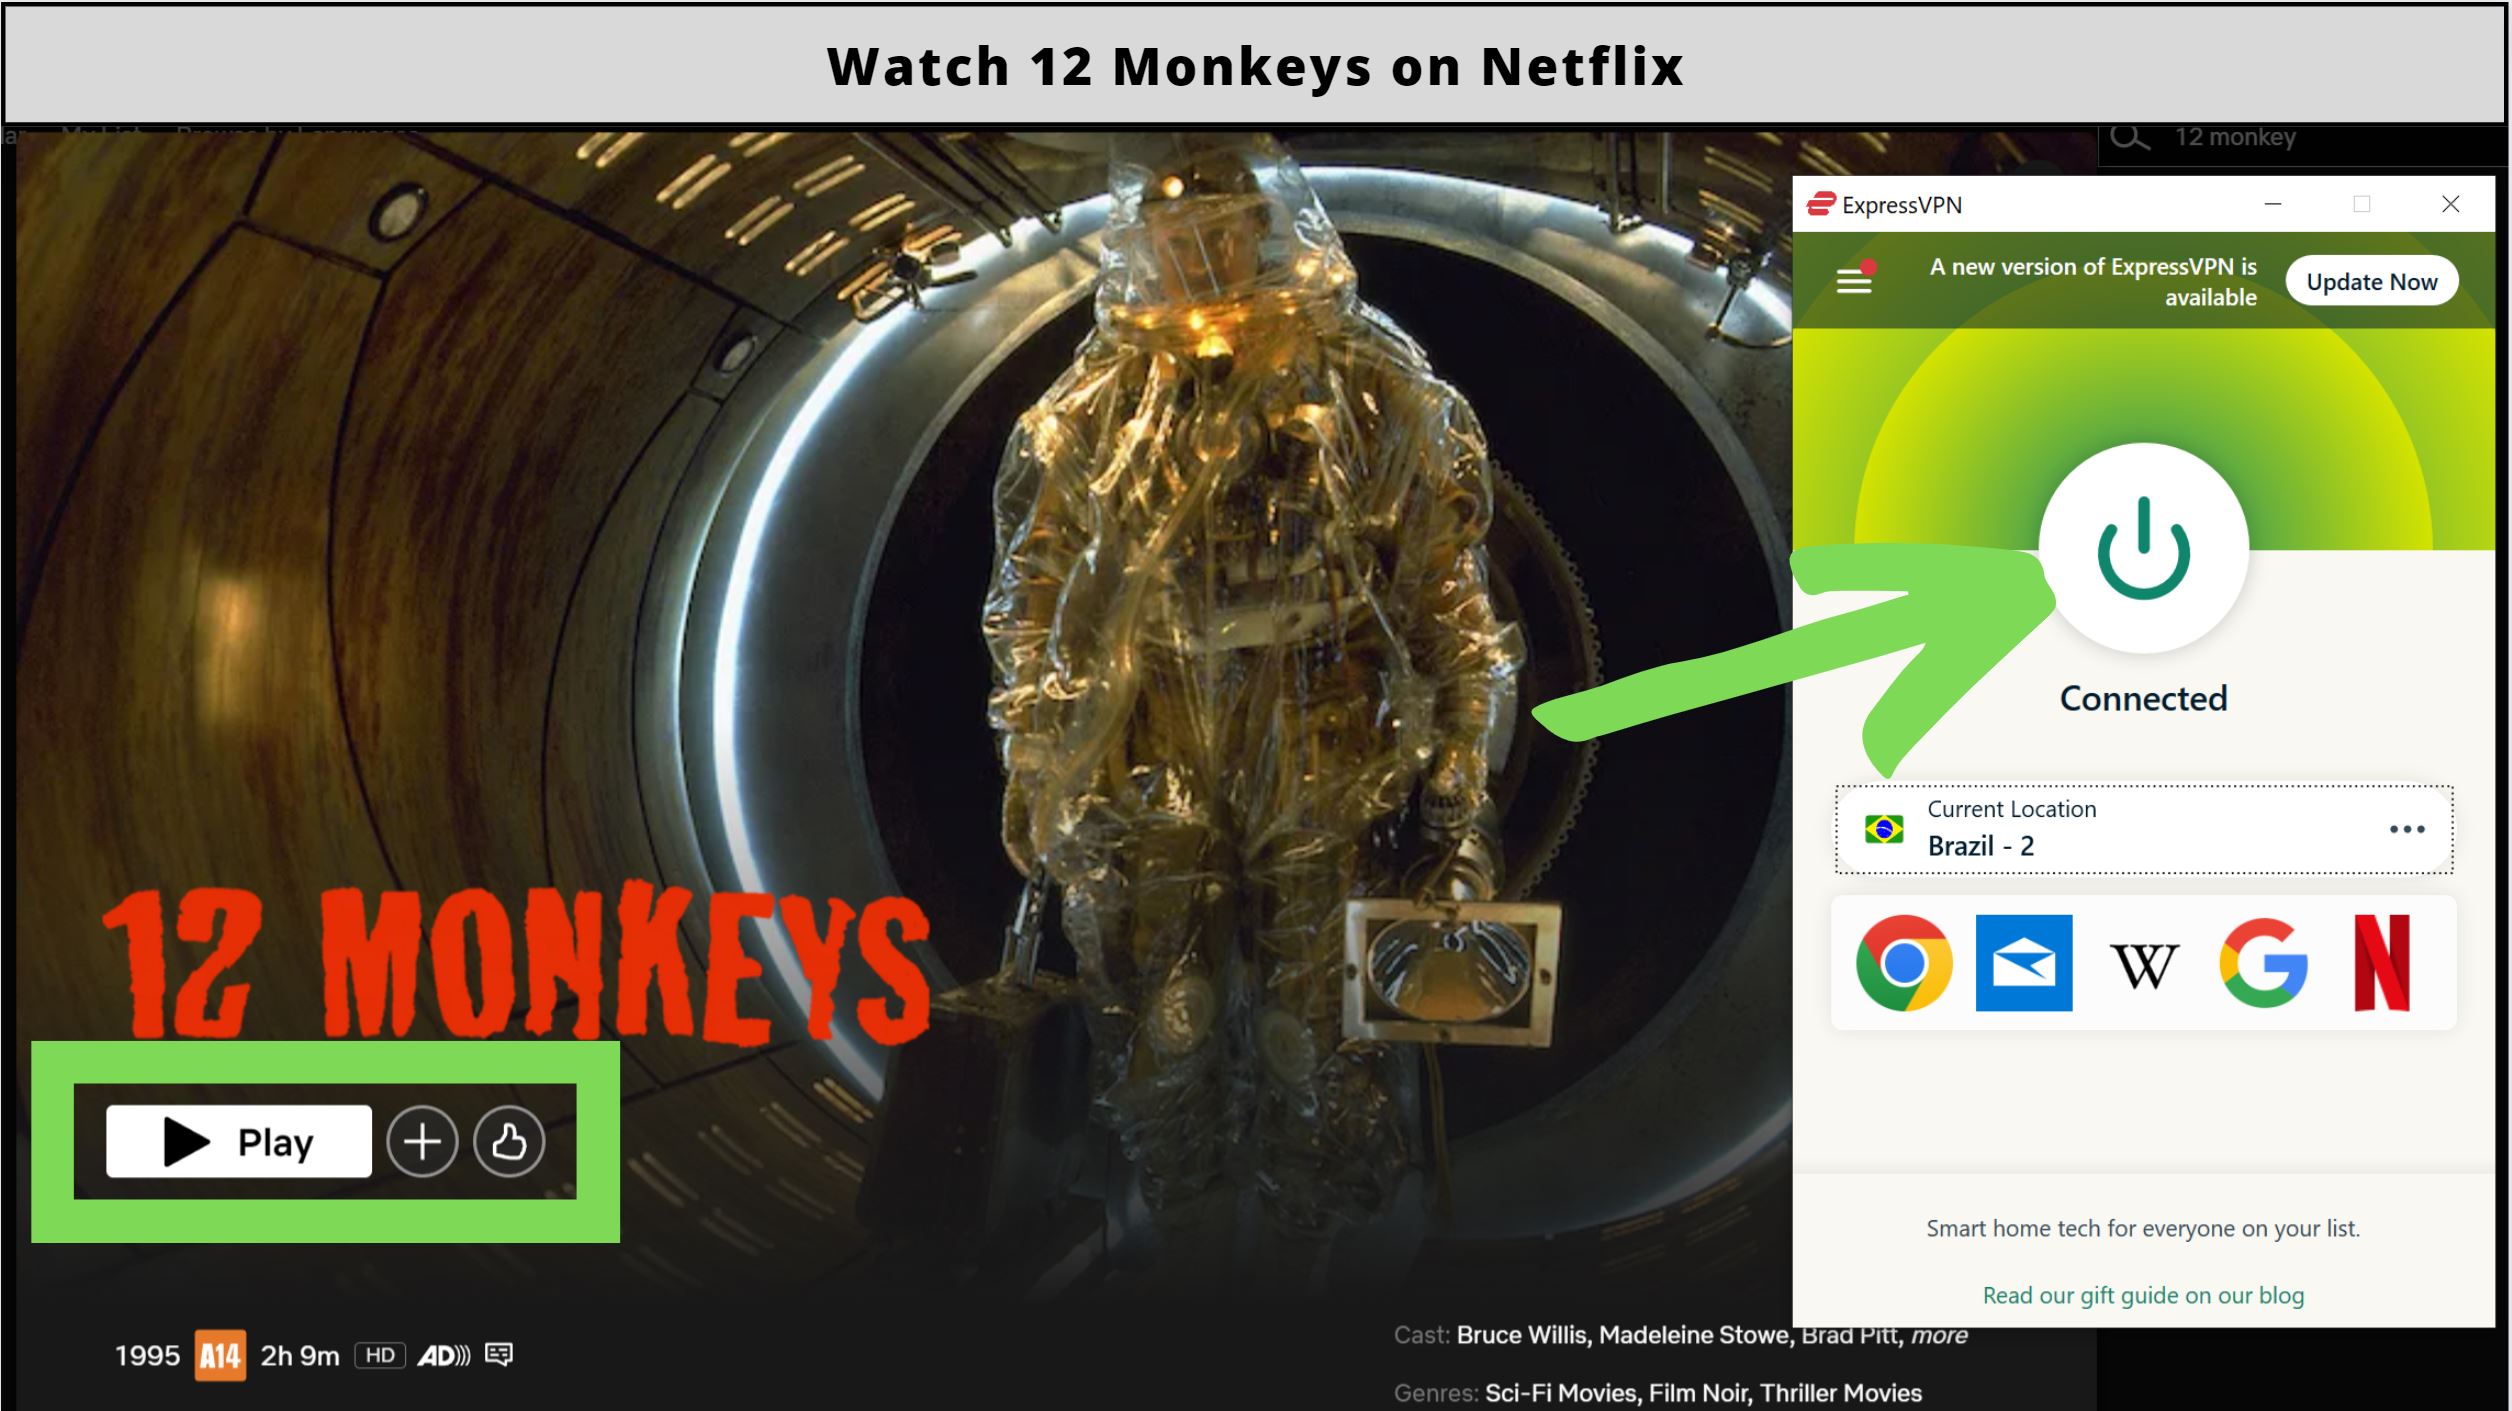 Is 12 Monkeys on Netflix?